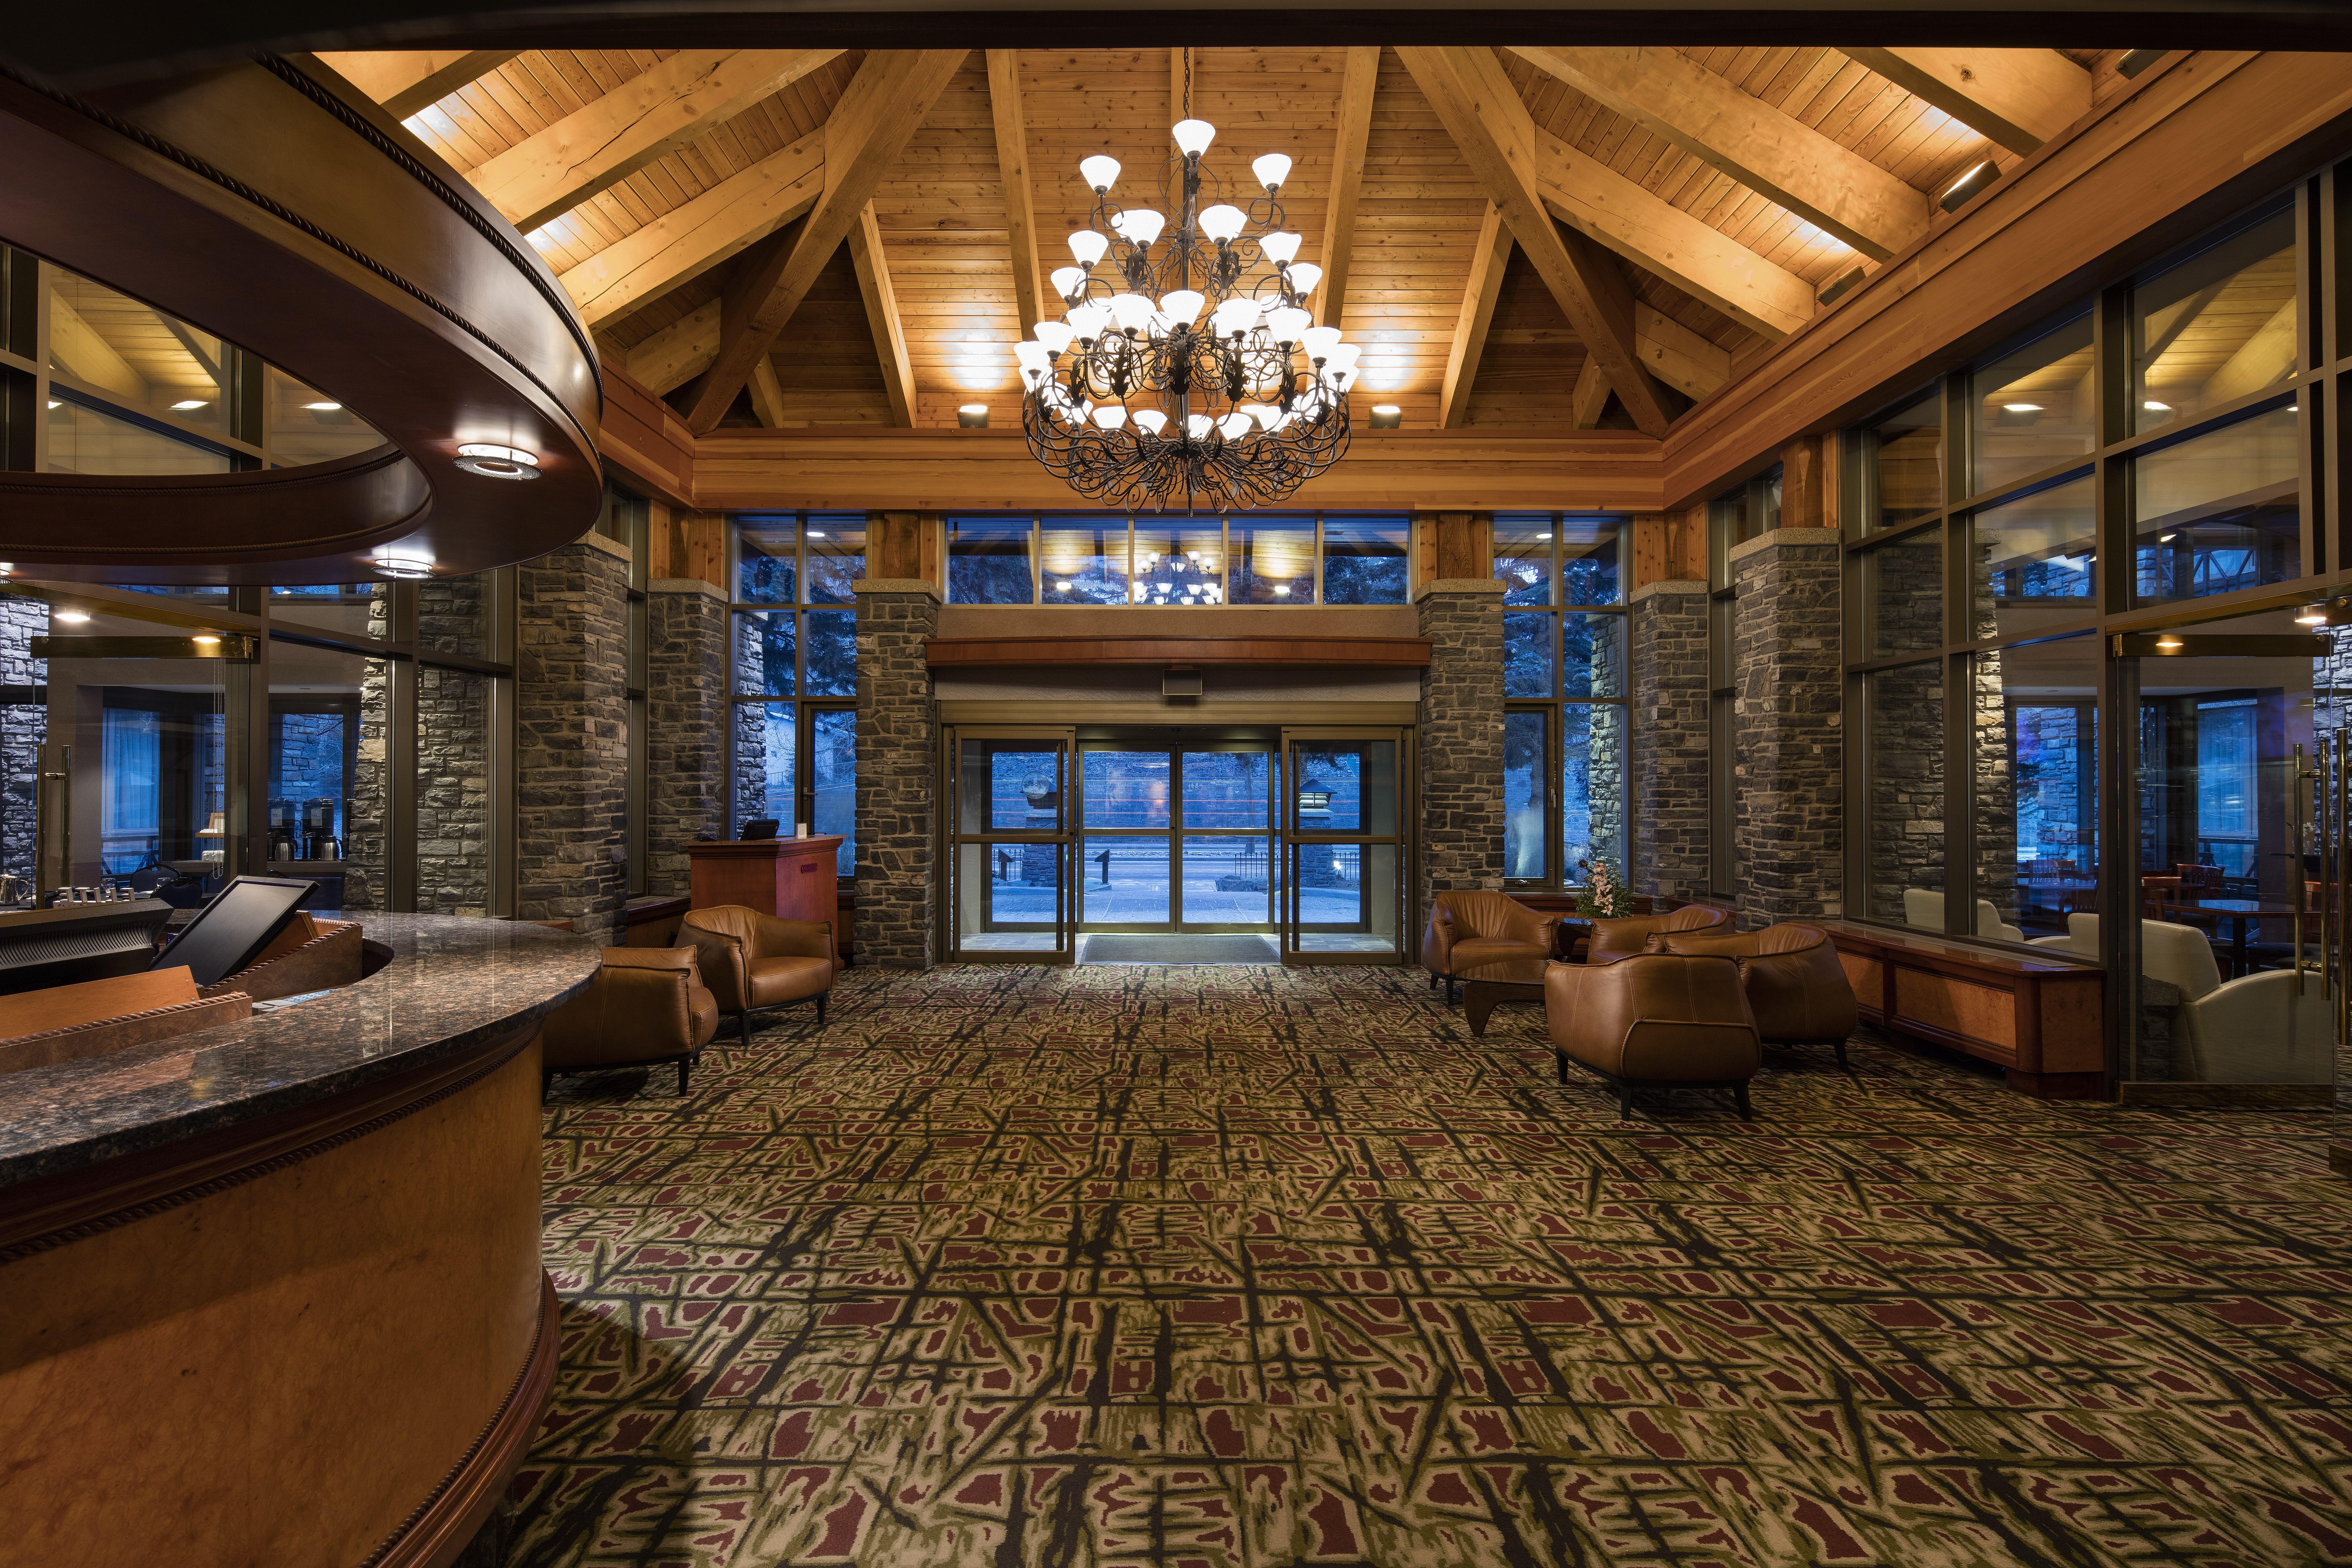 Royal Canadian Lodge Banff Exterior photo